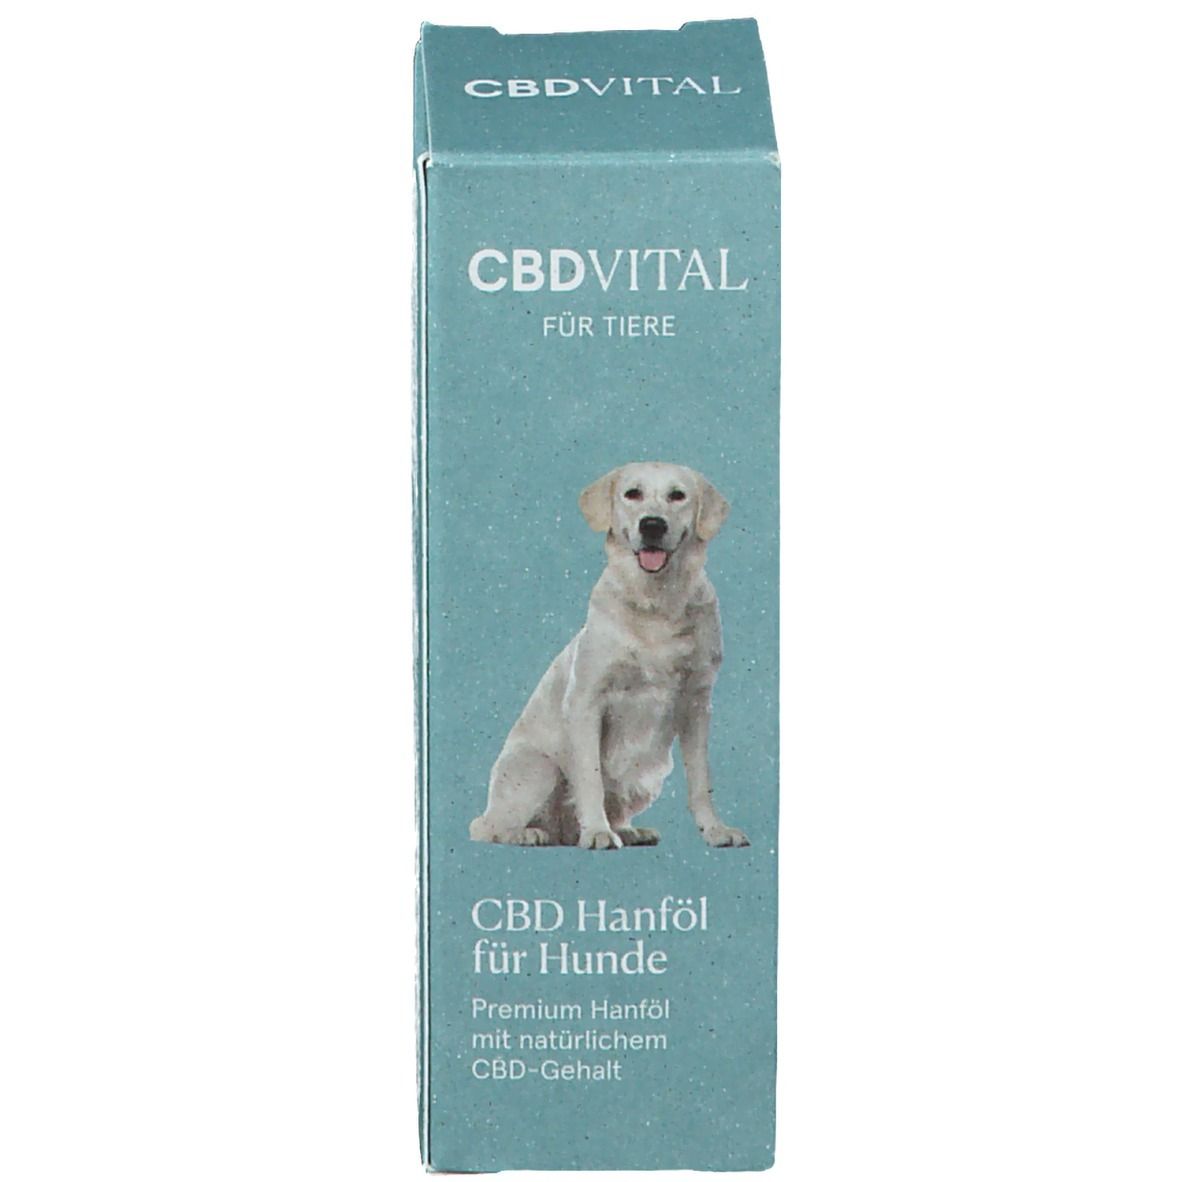 CBDVITAL Hanföl für Hunde